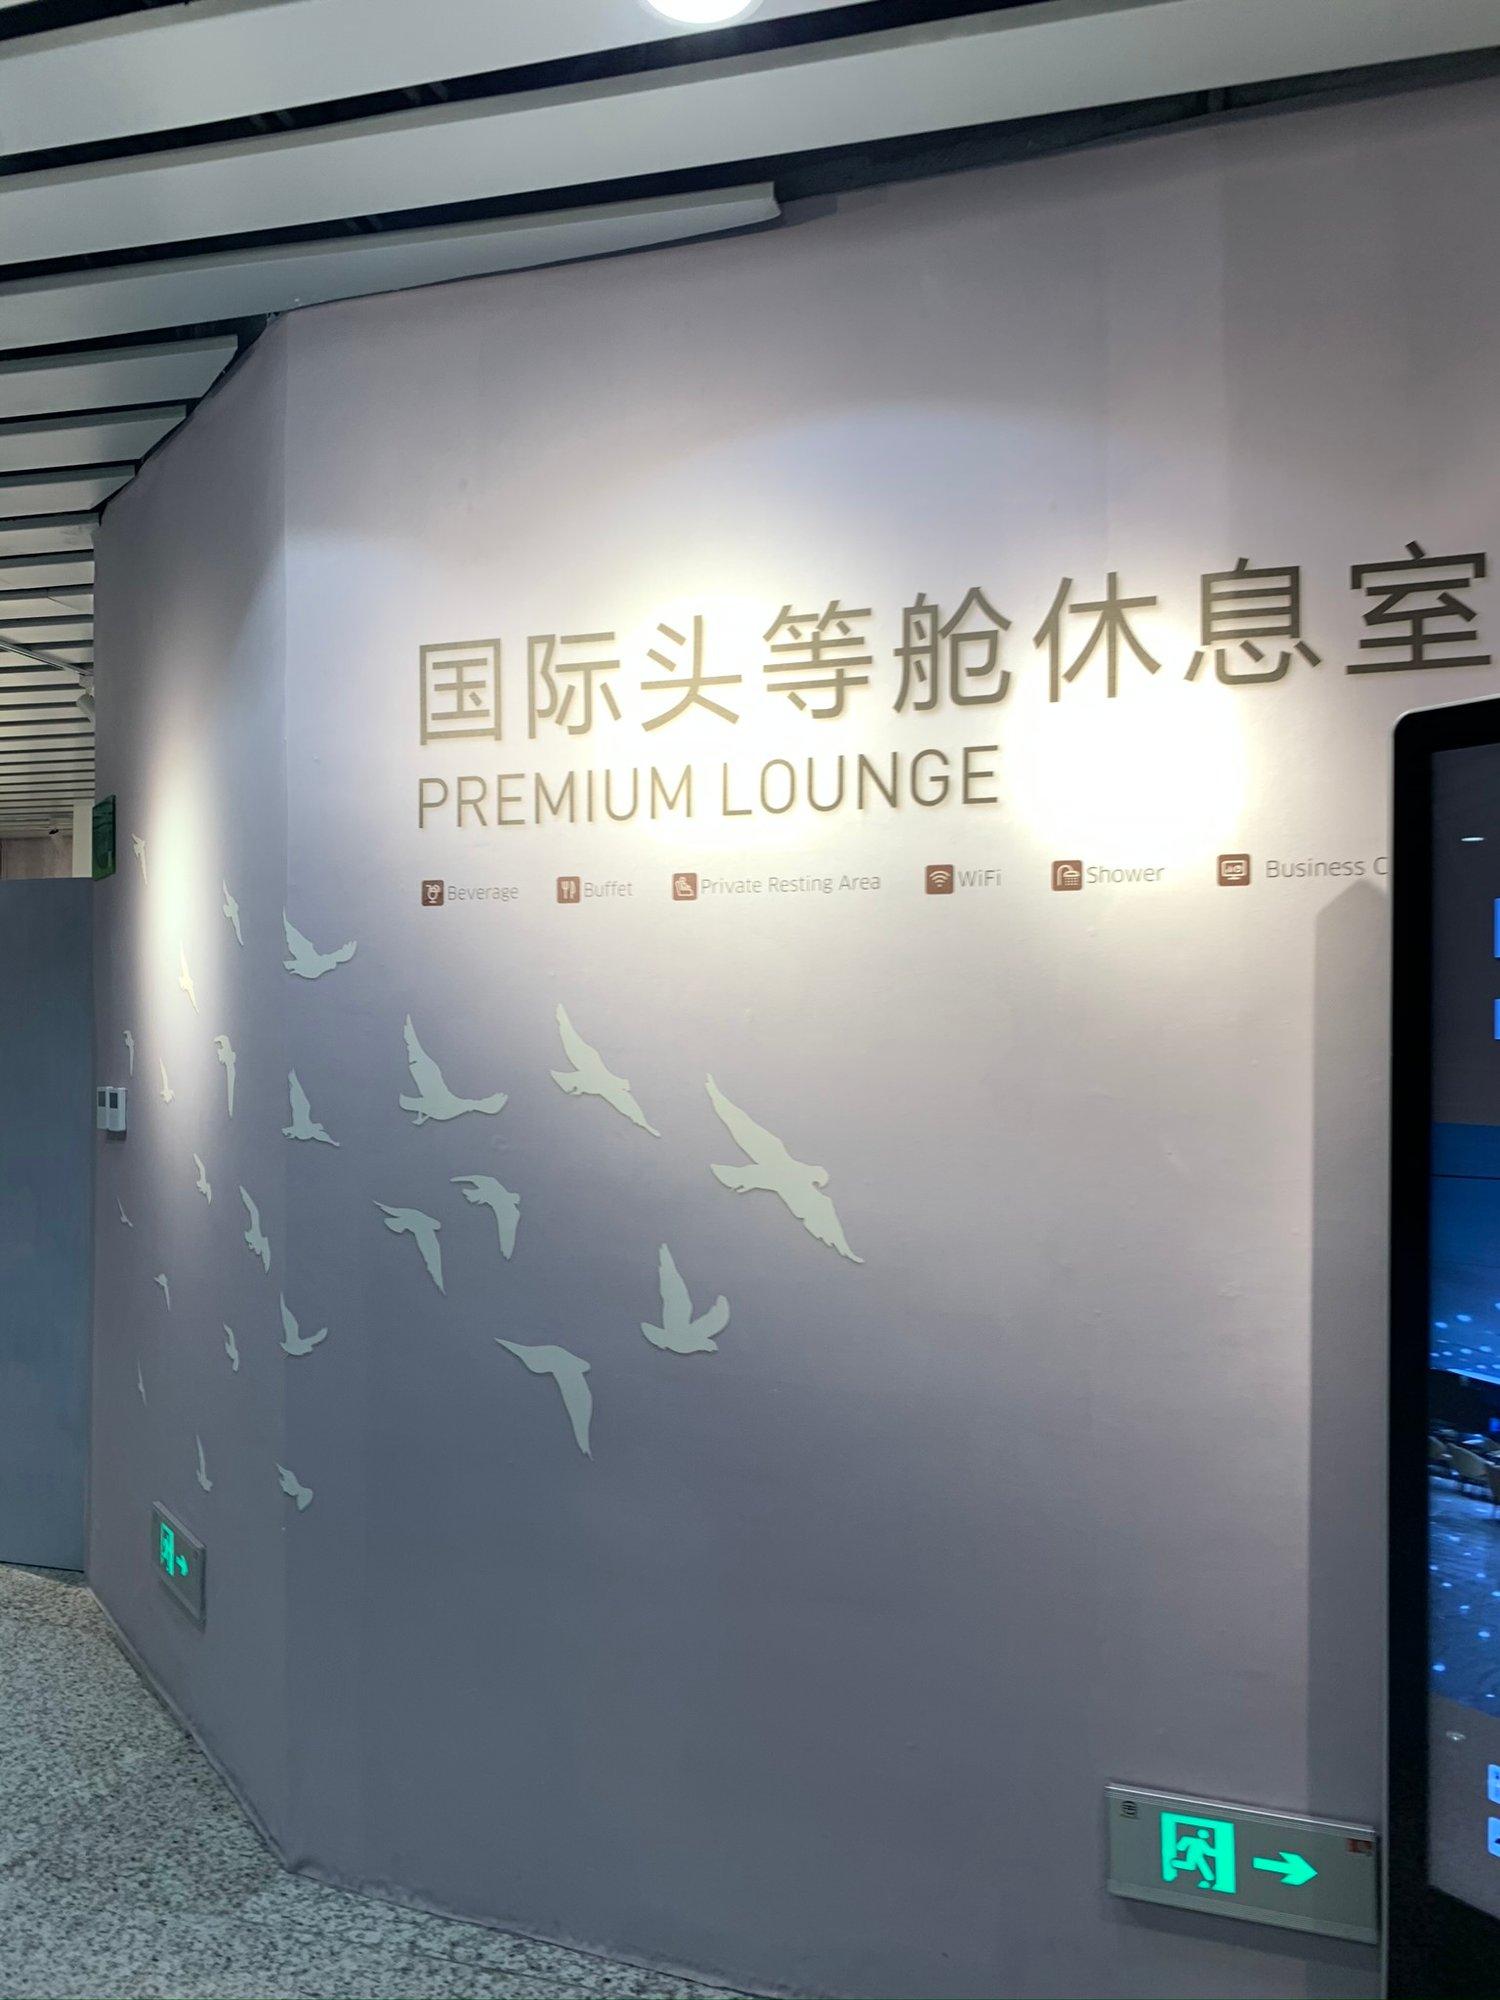 Premium Lounge image 19 of 19